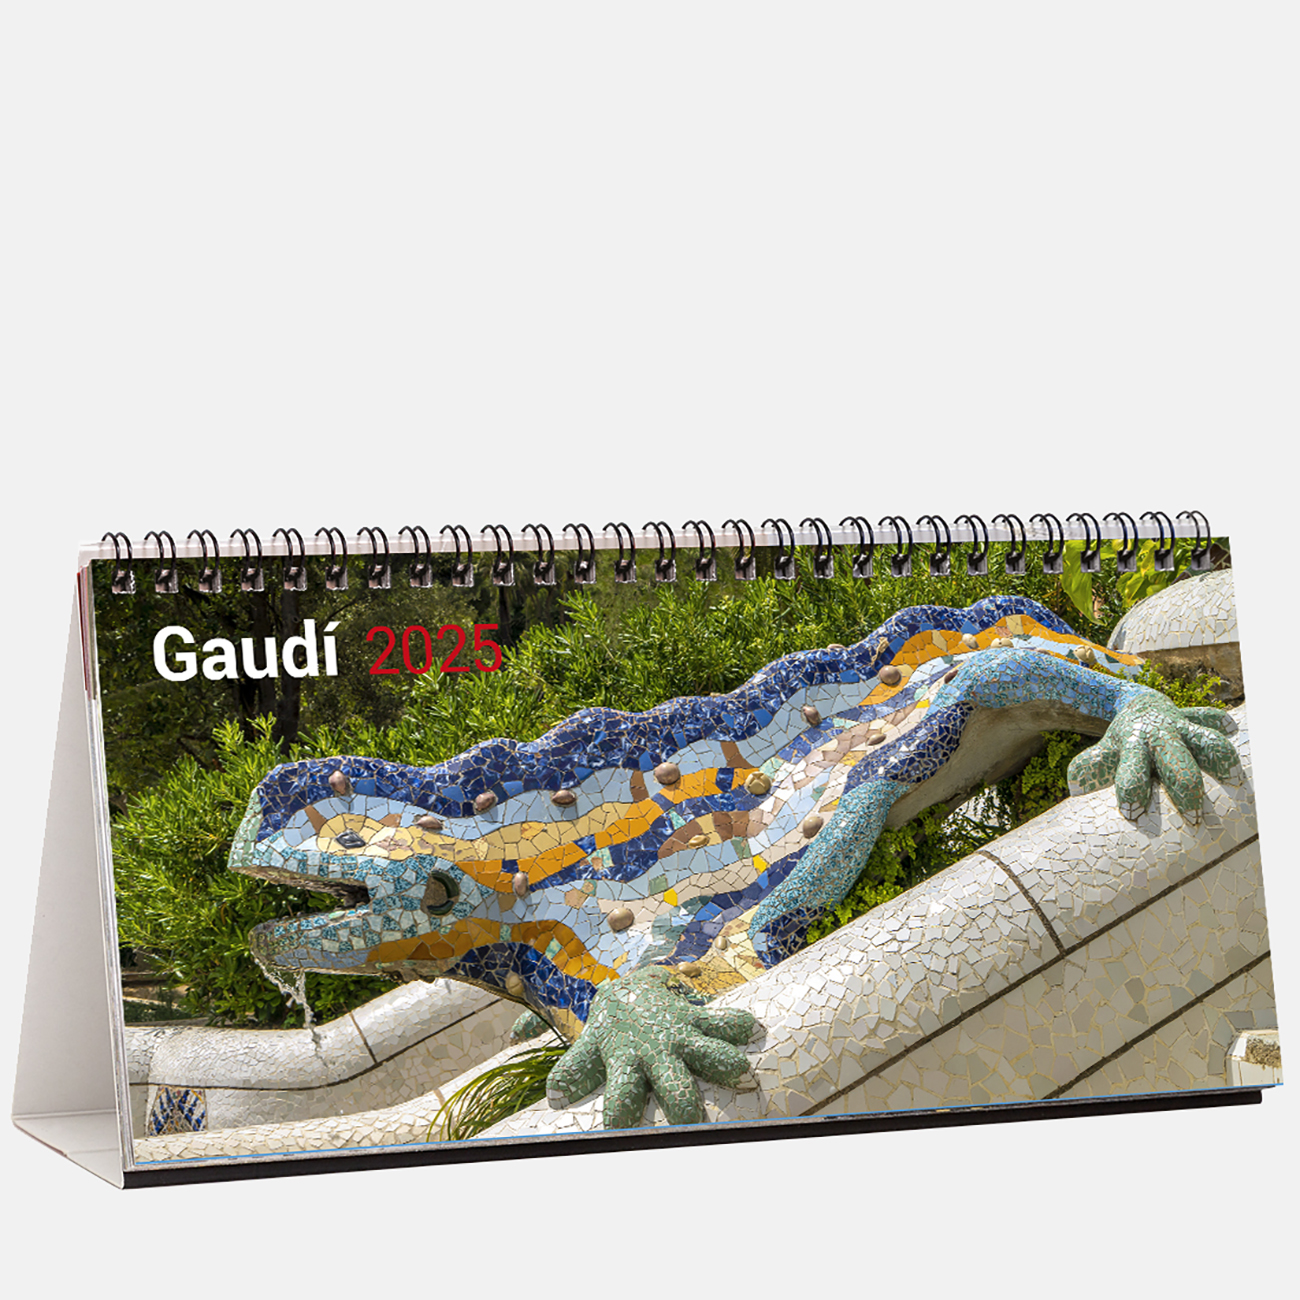 Calendrier 2025 Gaudí s25g calendario sobremesa panoramico 2025 gaudi